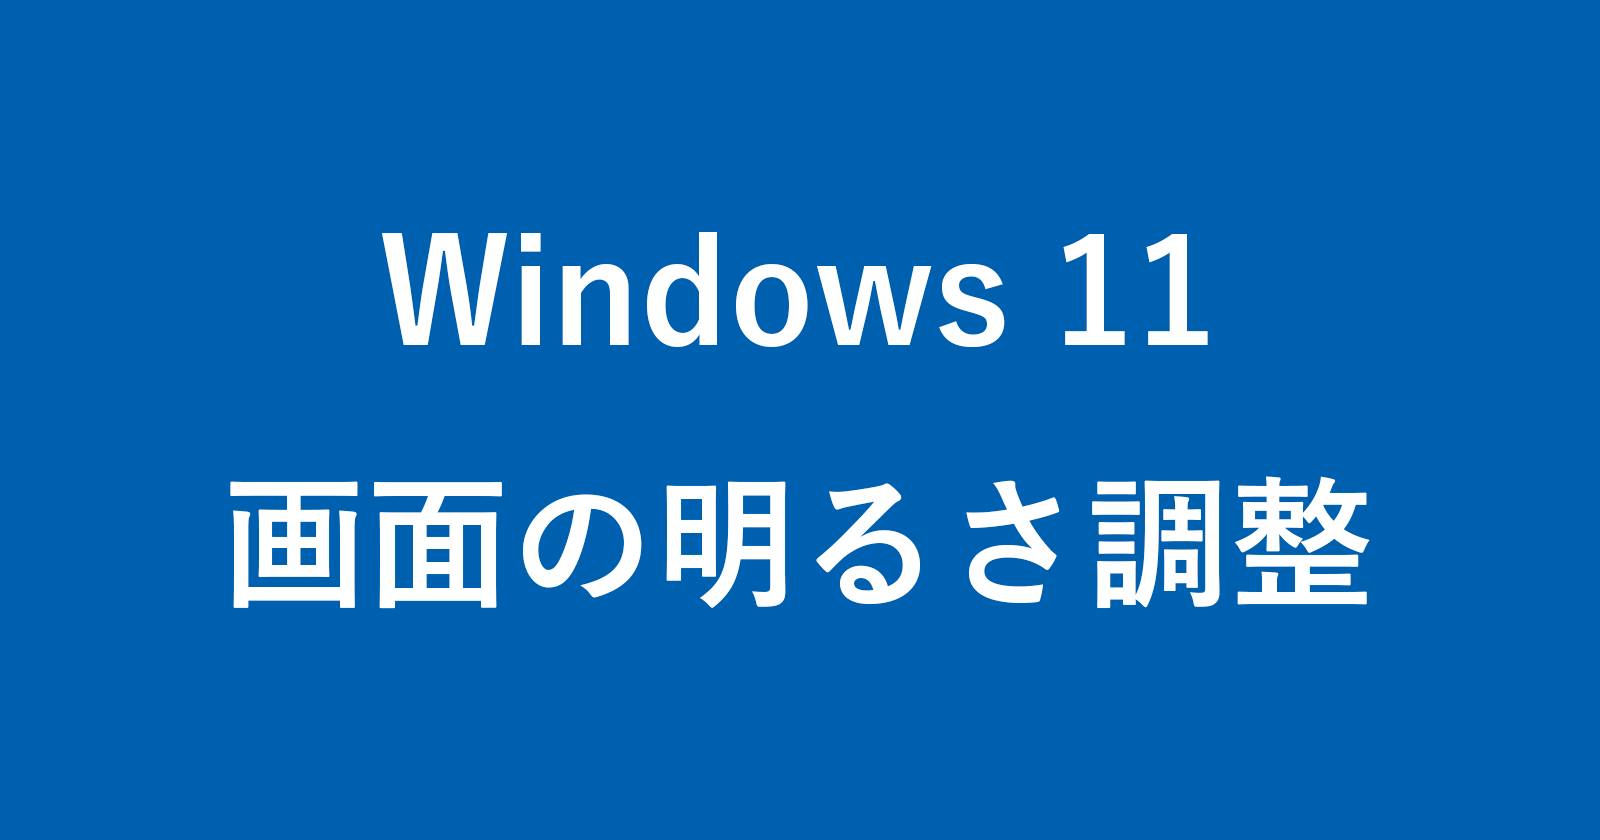 windows 11 screen brightness